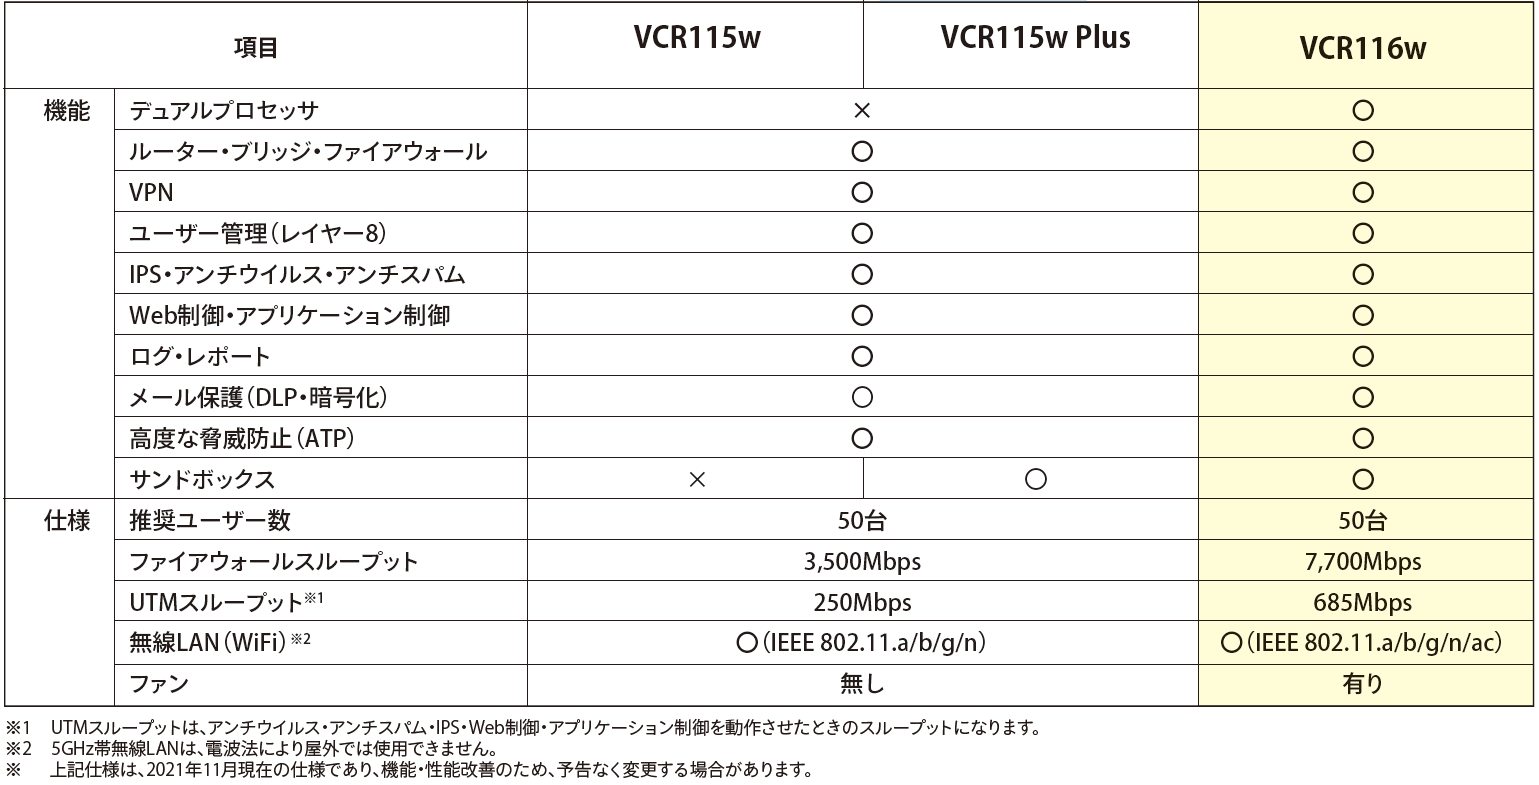 VCR116w Spec